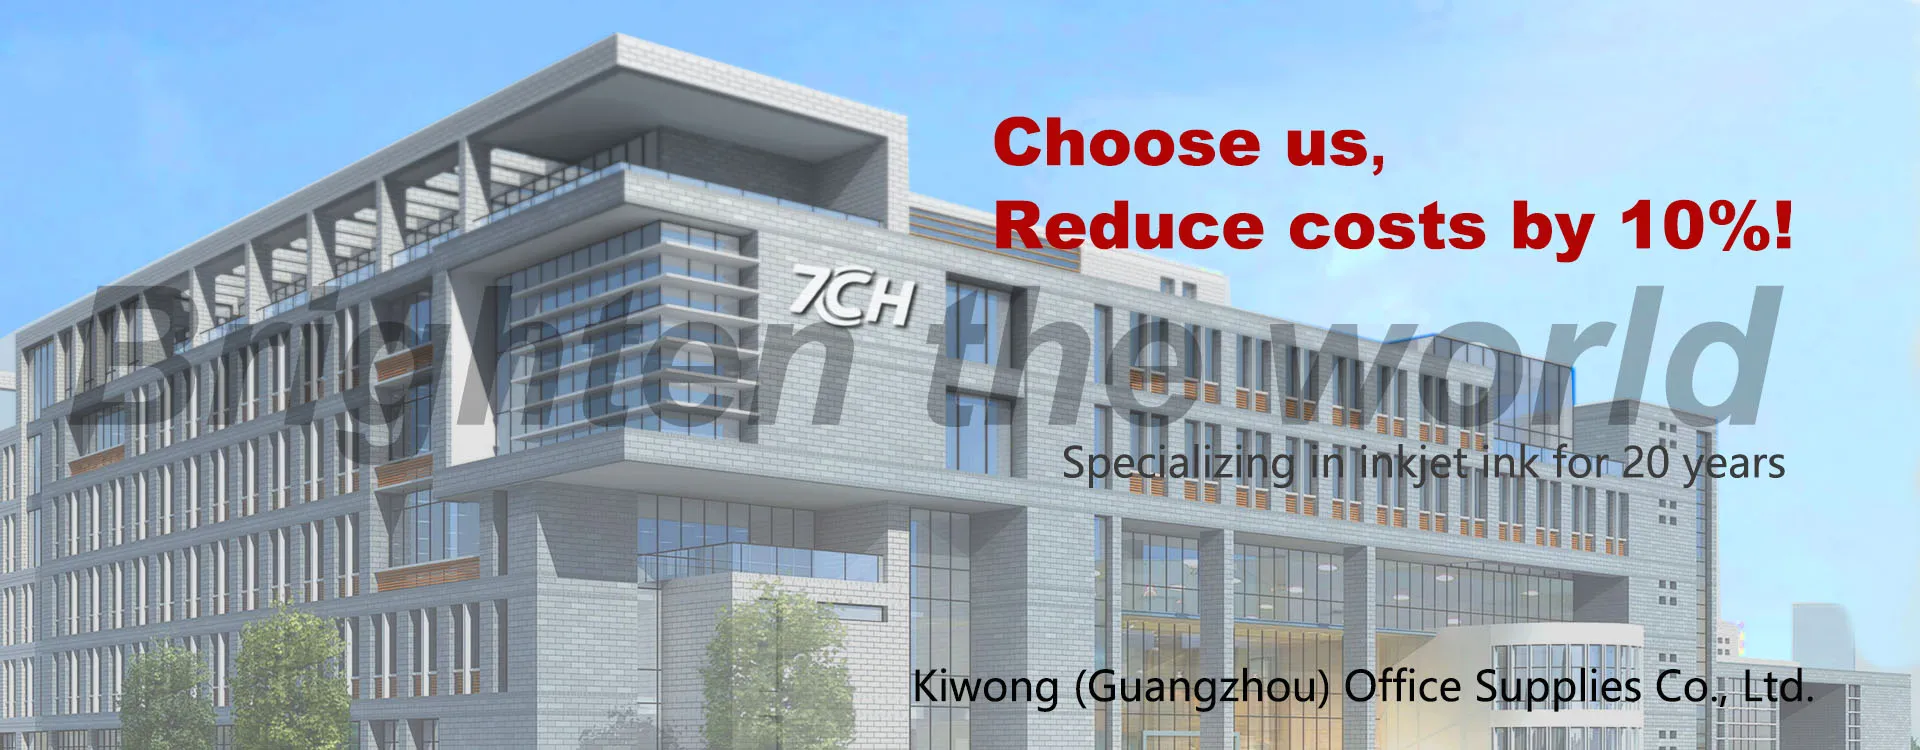 Kiwong (Guangzhou) Office Supplies Co., Ltd.